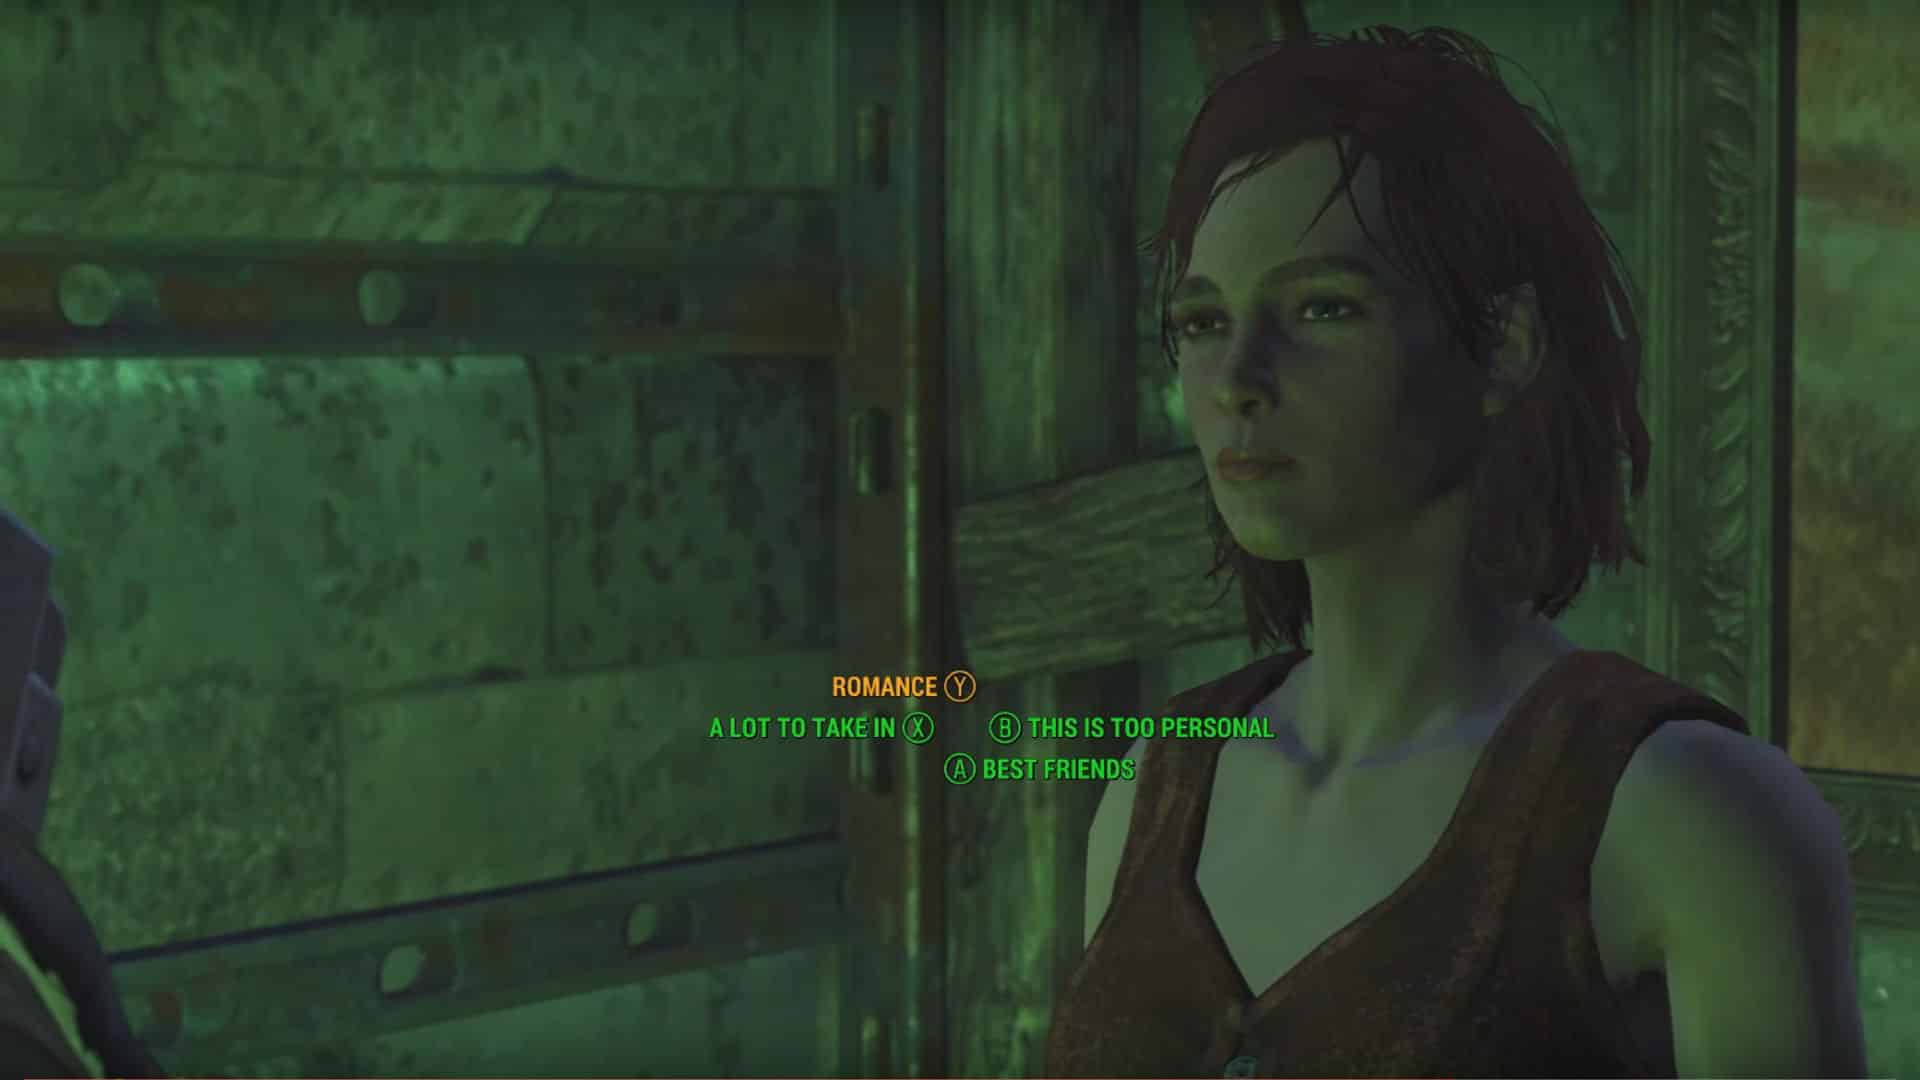 Fallout 4 flirt with cait